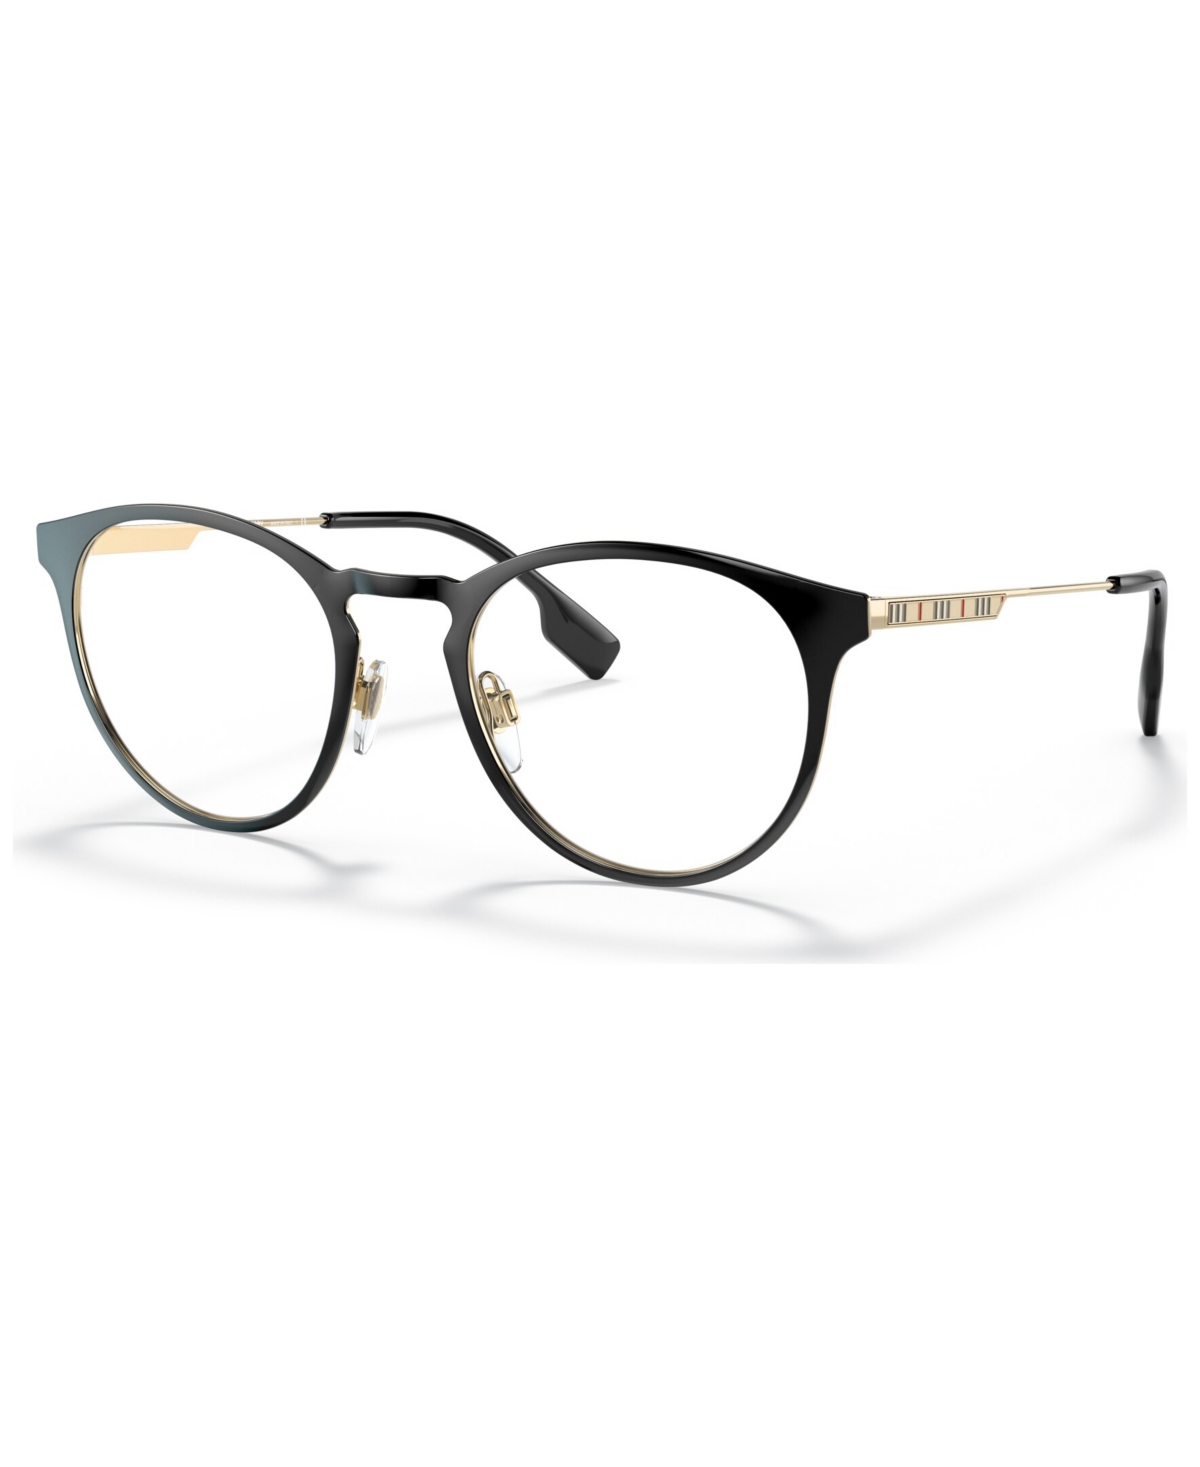 Men's Phantos Eyeglasses, BE136051-o - Black